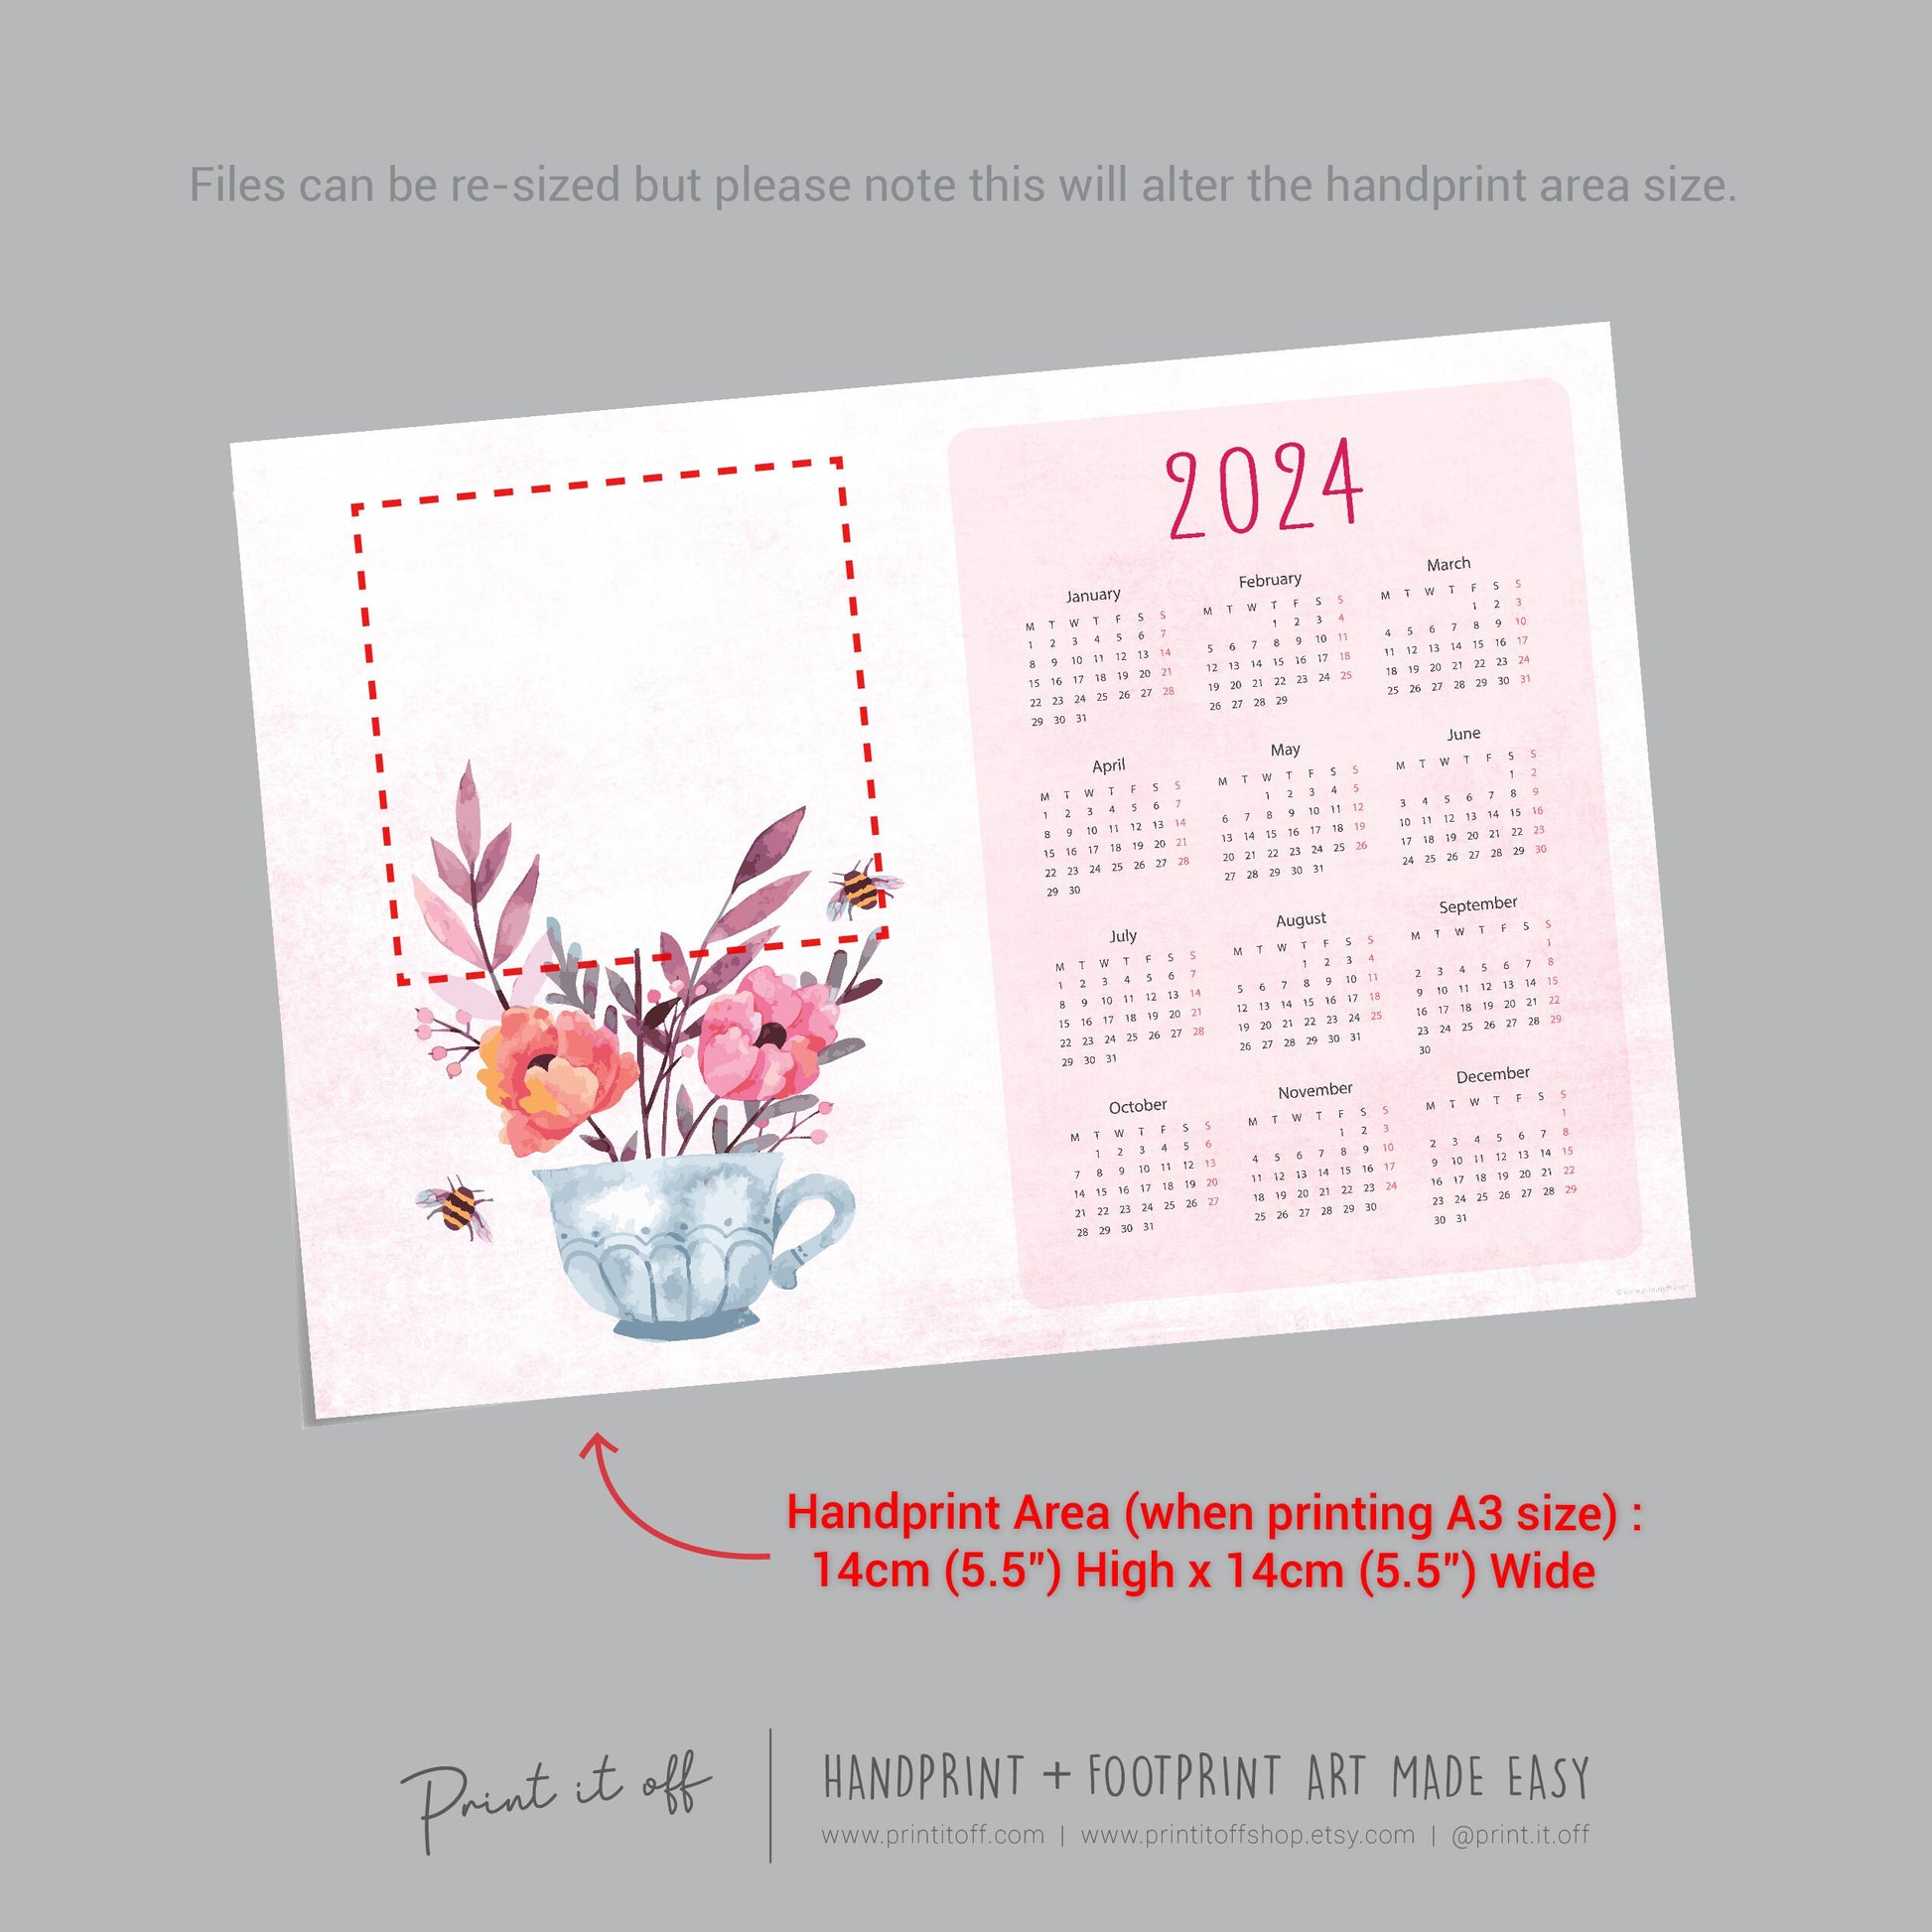 2024 Flower Teacup Calendar Year / Handprint Footprint Art Craft / Activity DIY Gift Keepsake / Baby Kids Child Toddler / Print It Off